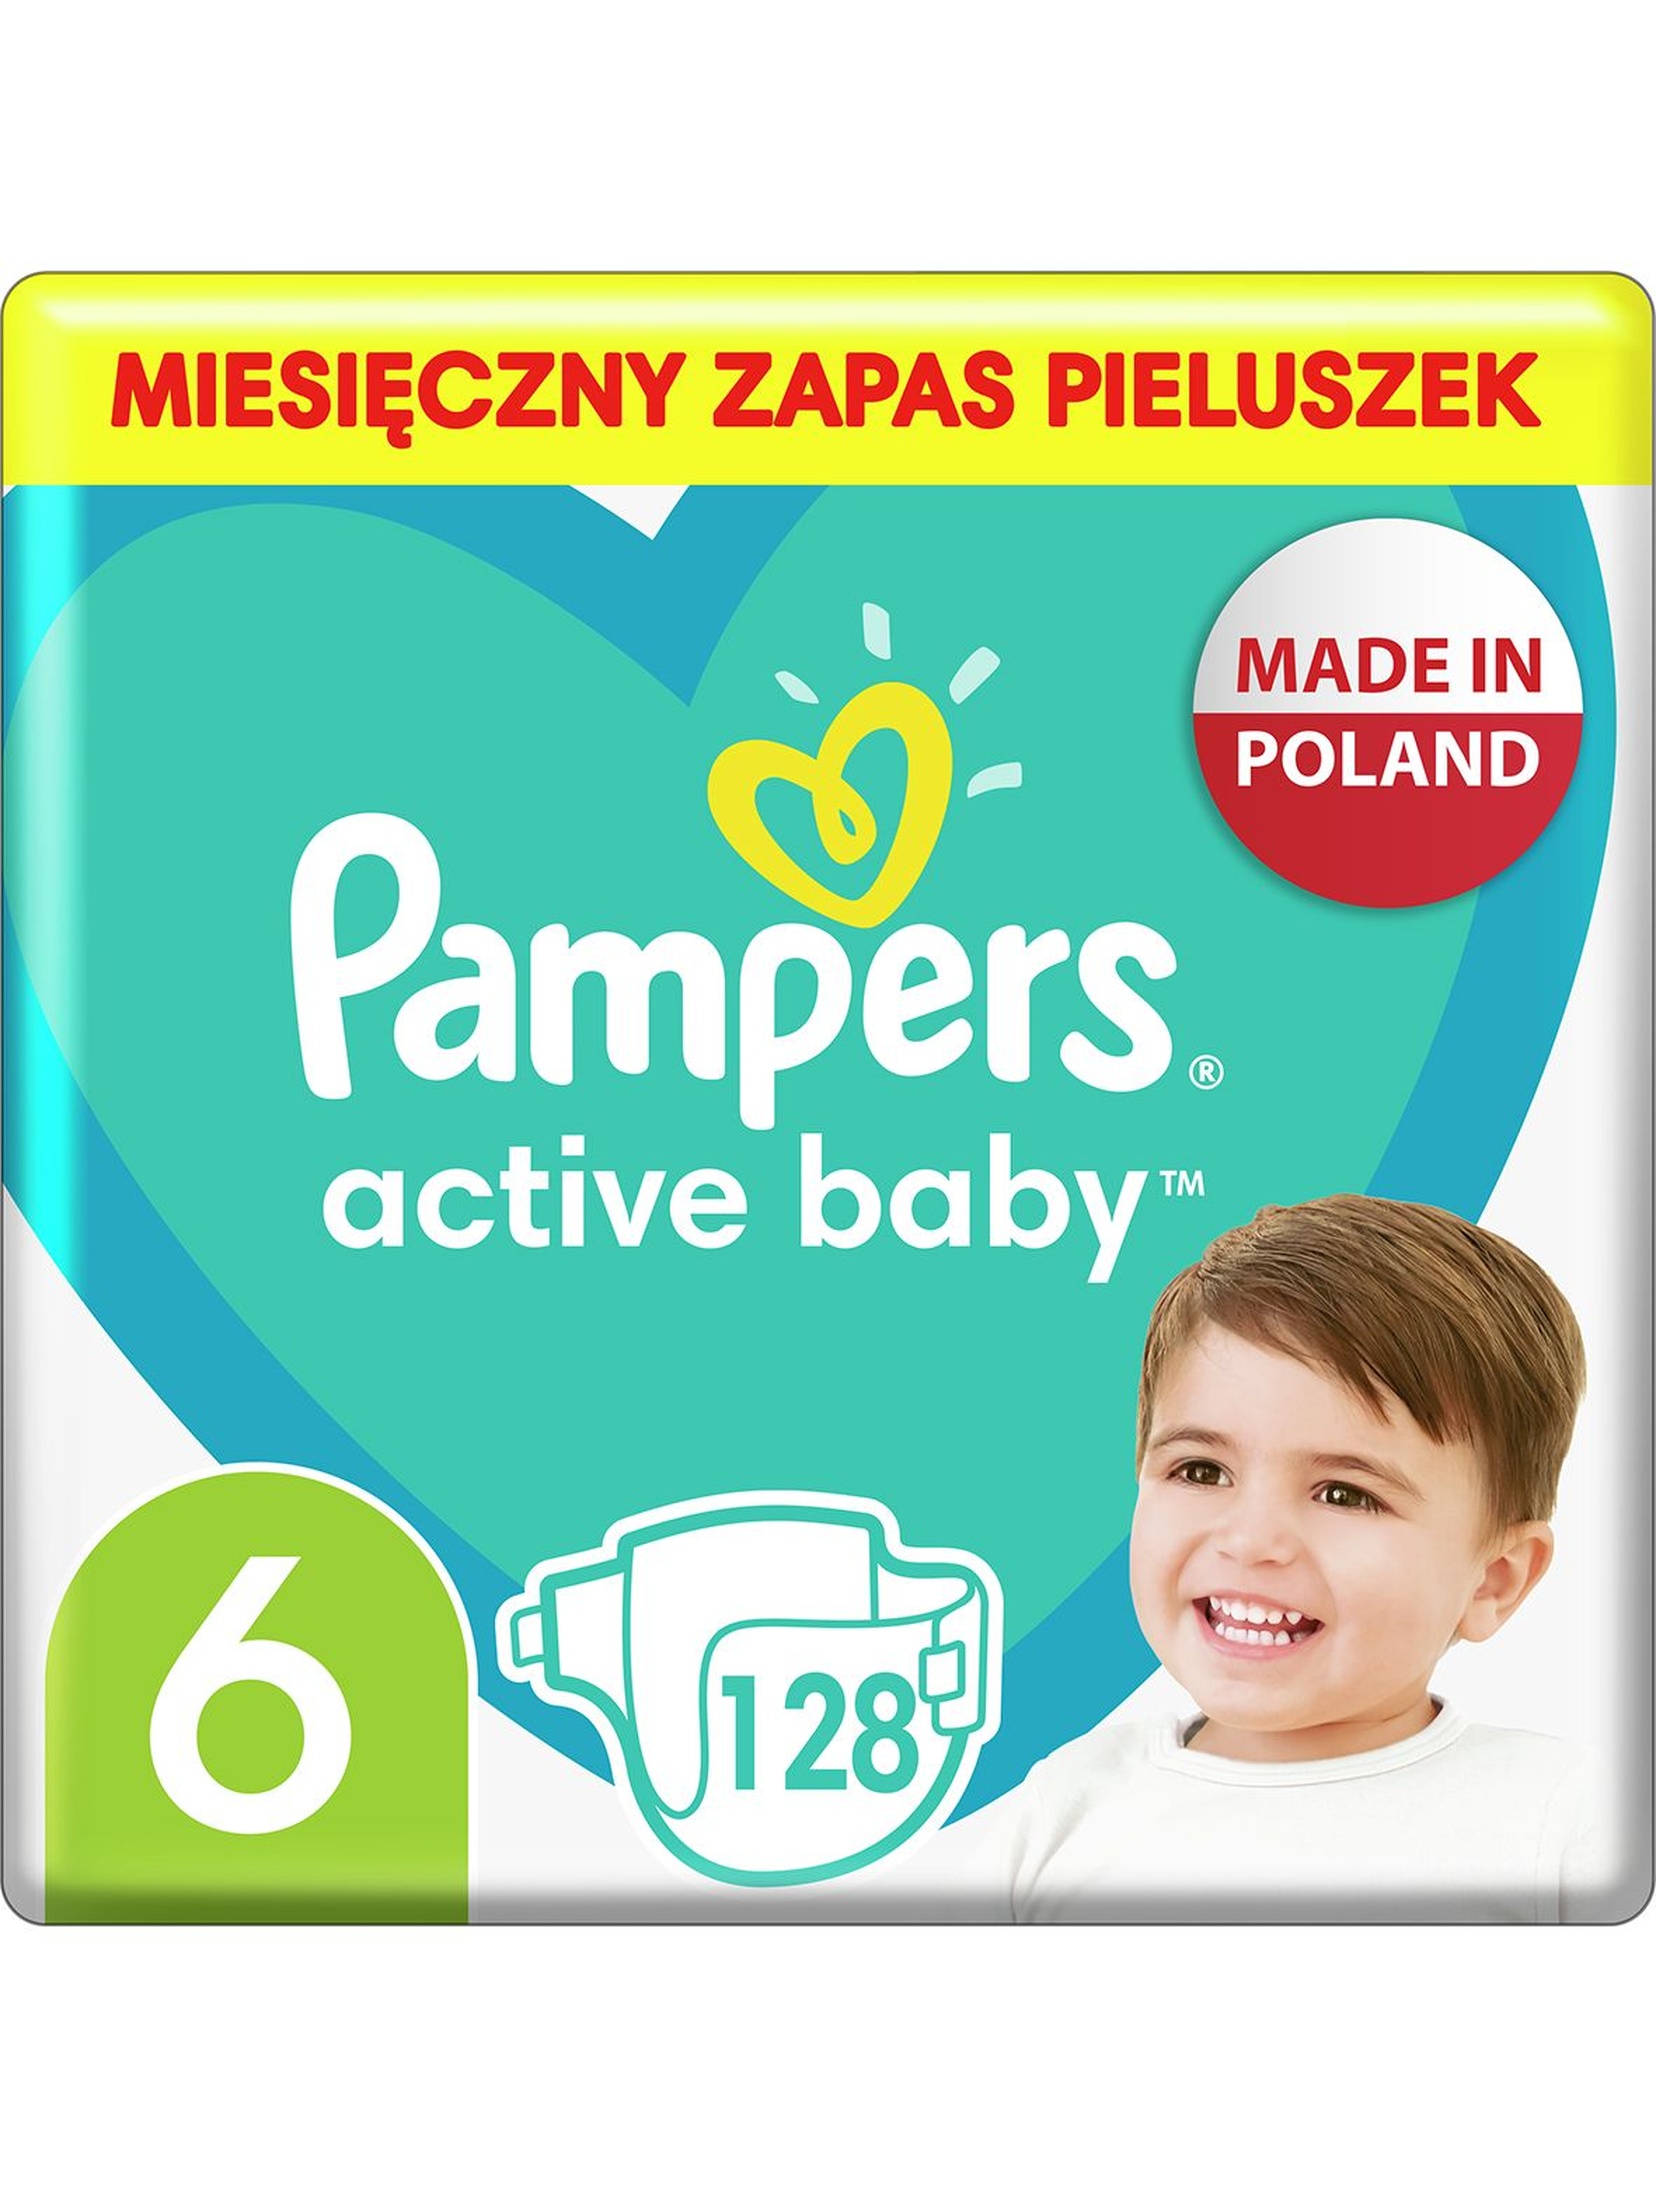 Pampers Active Baby, rozmiar 6, 128 pieluszek, 13-18kg